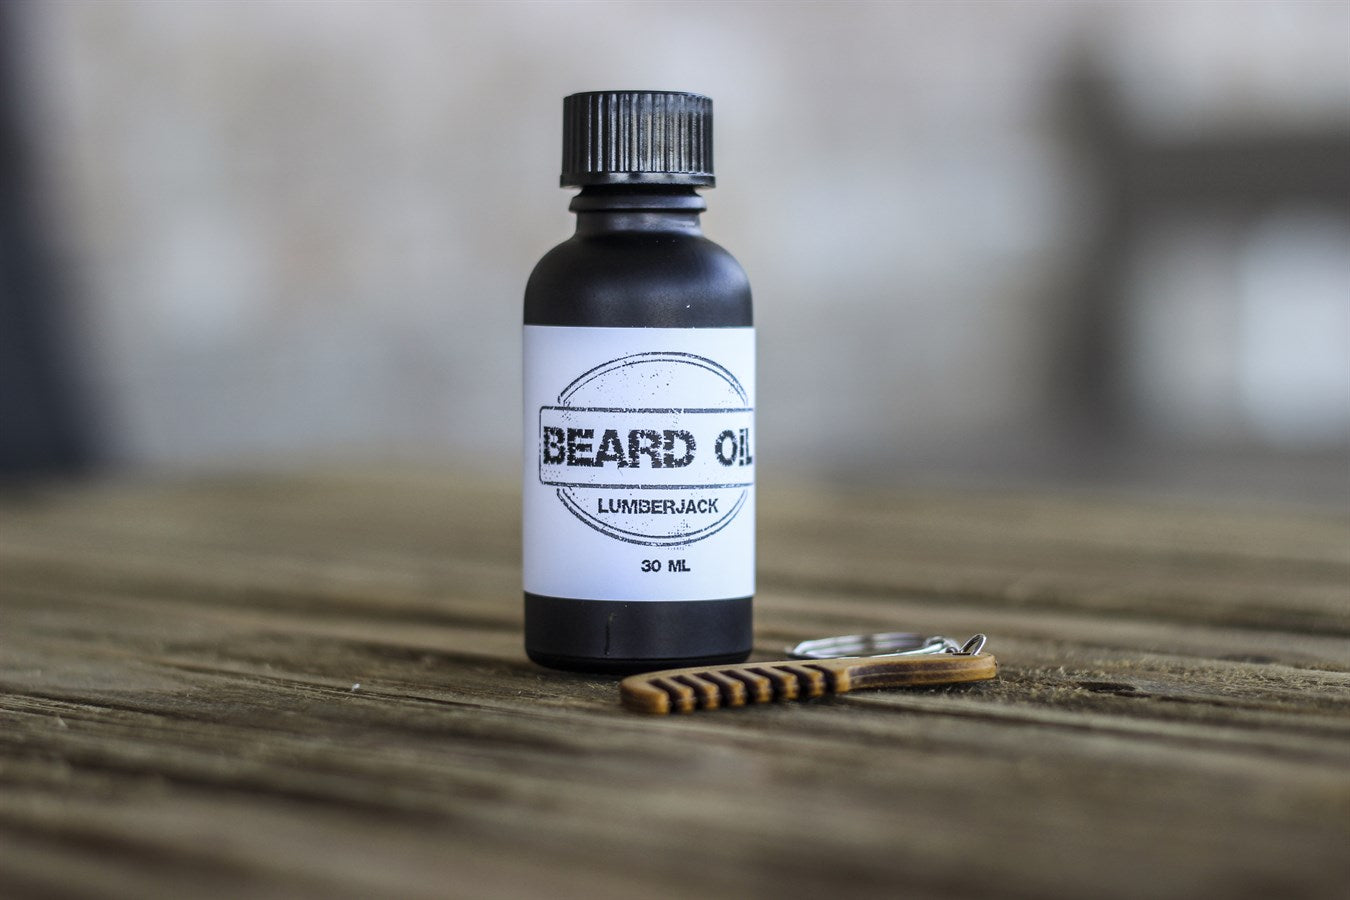 Beard Oils | 10 Scents Available